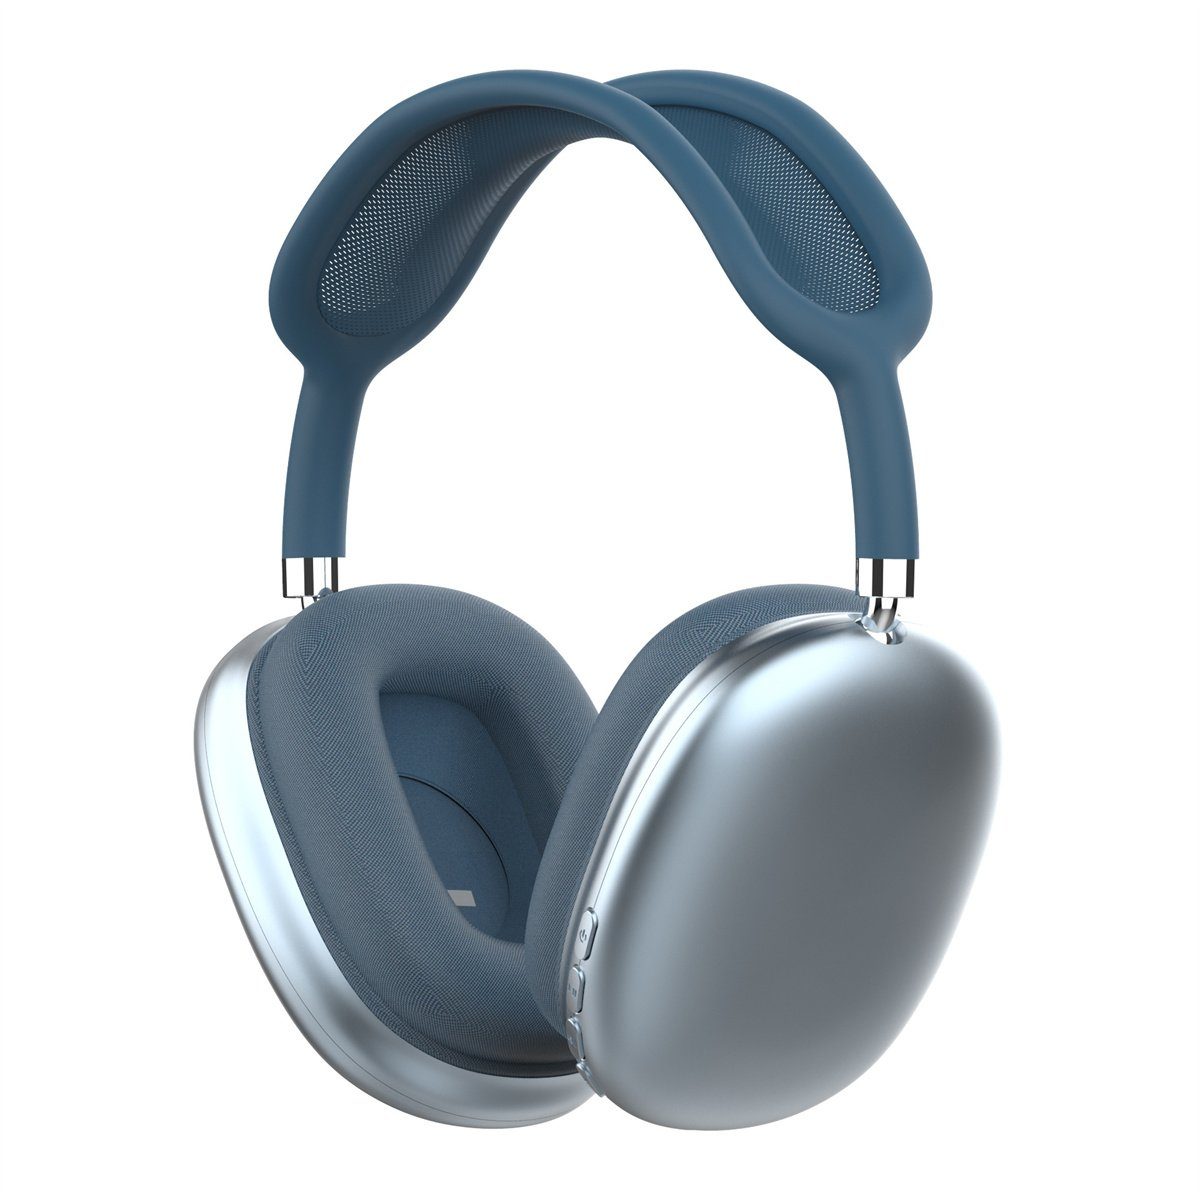 Akkulaufzeit Stunden carefully 12 Gaming-Headset Bluetooth-Headset, Kopfhörer mit Mikrofon Himmelblau selected